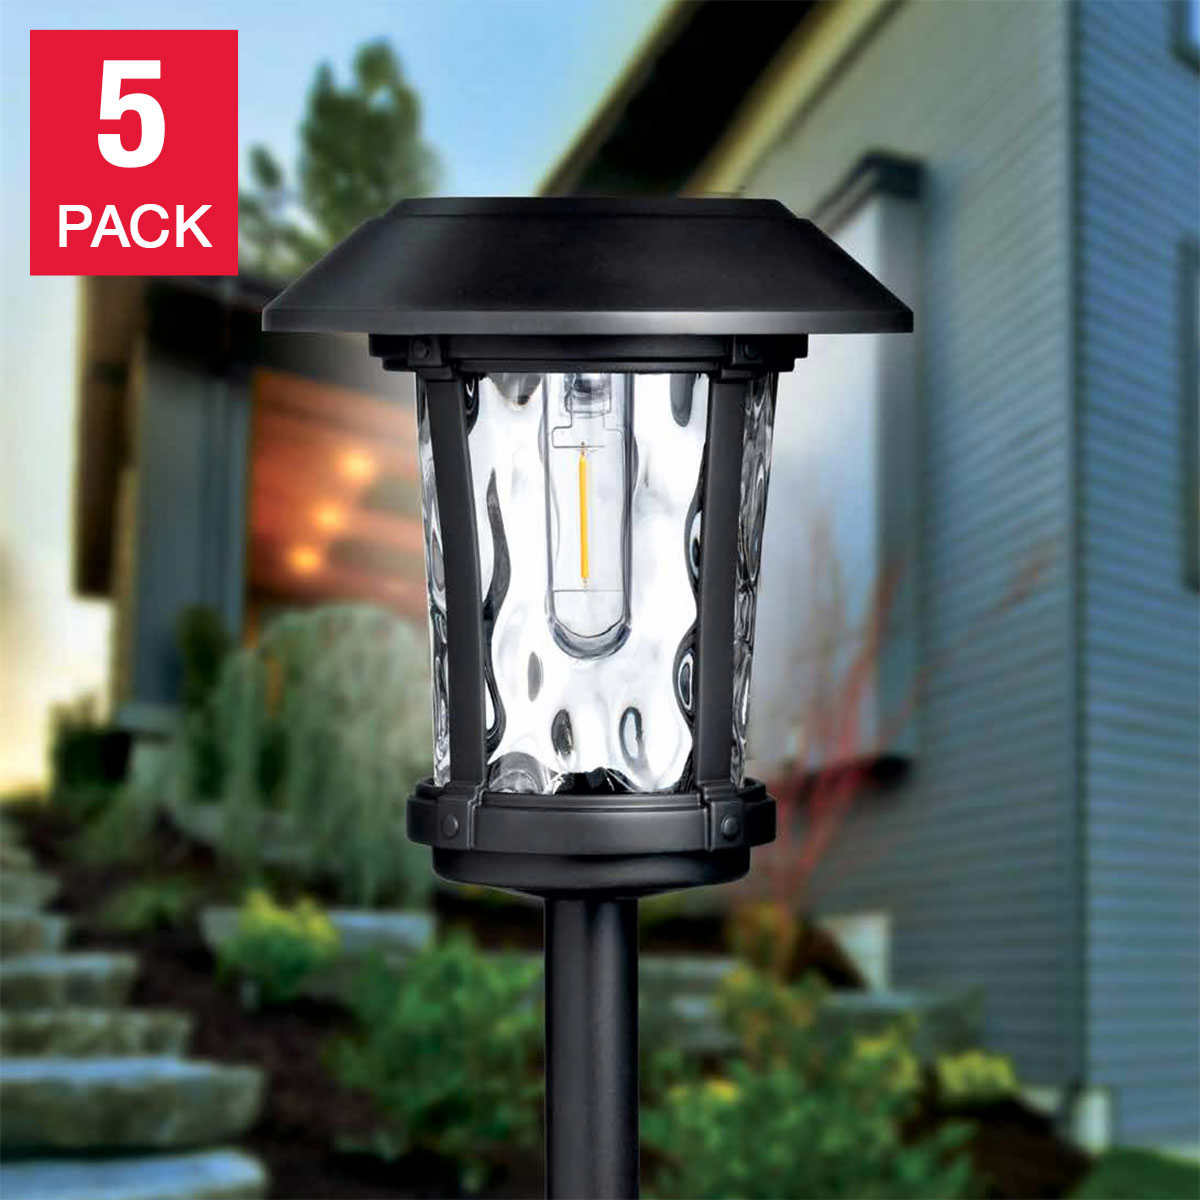 Retro Garden Solar Metal Flame Lantern Hanging Lamp Lighting Outdoor For Pathway